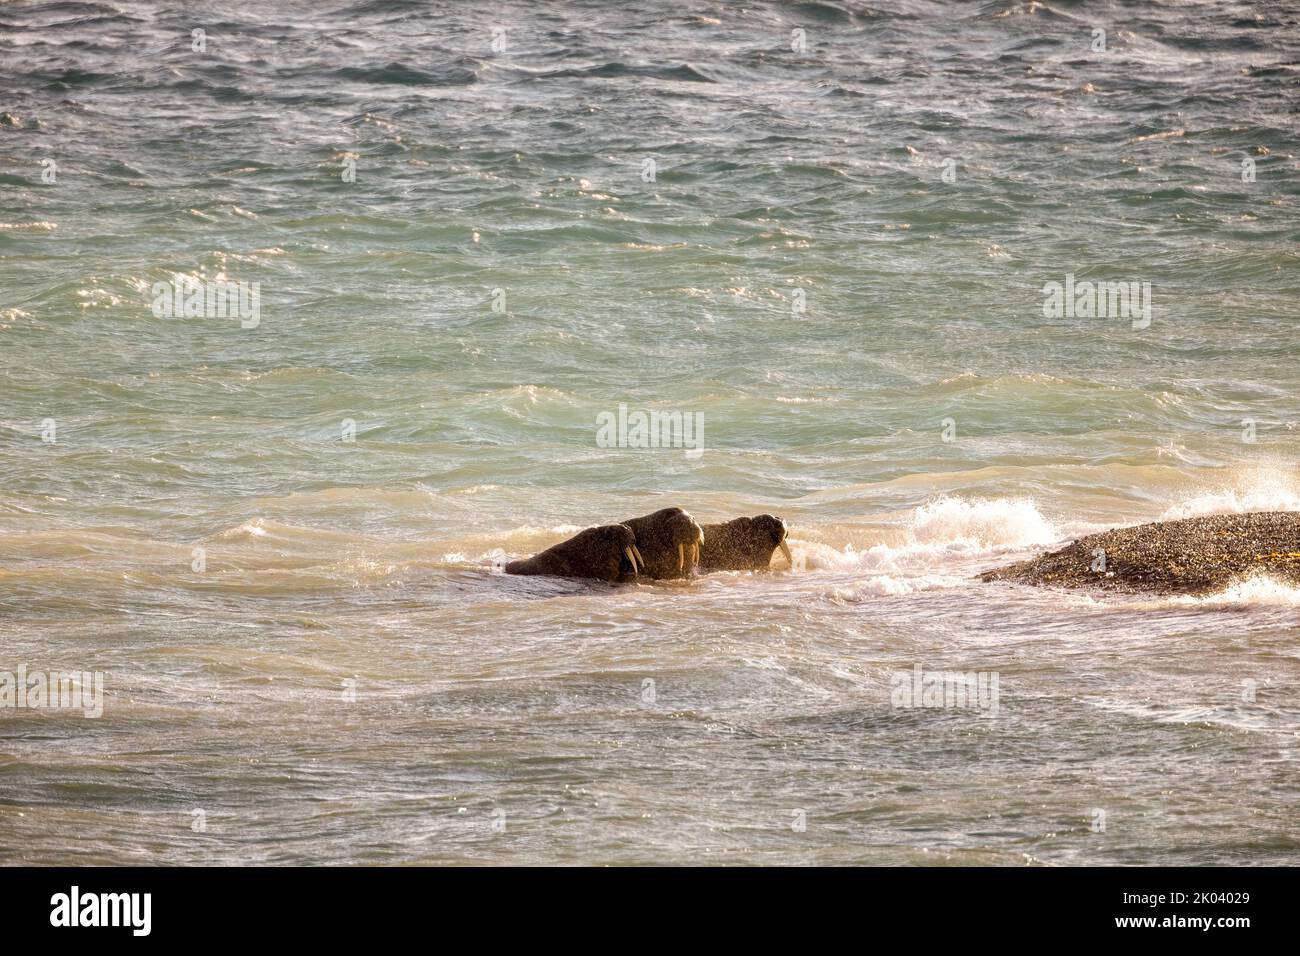 Adult walrus off southern coast of Devon Island, Nunavut, Canada. Stock Photo